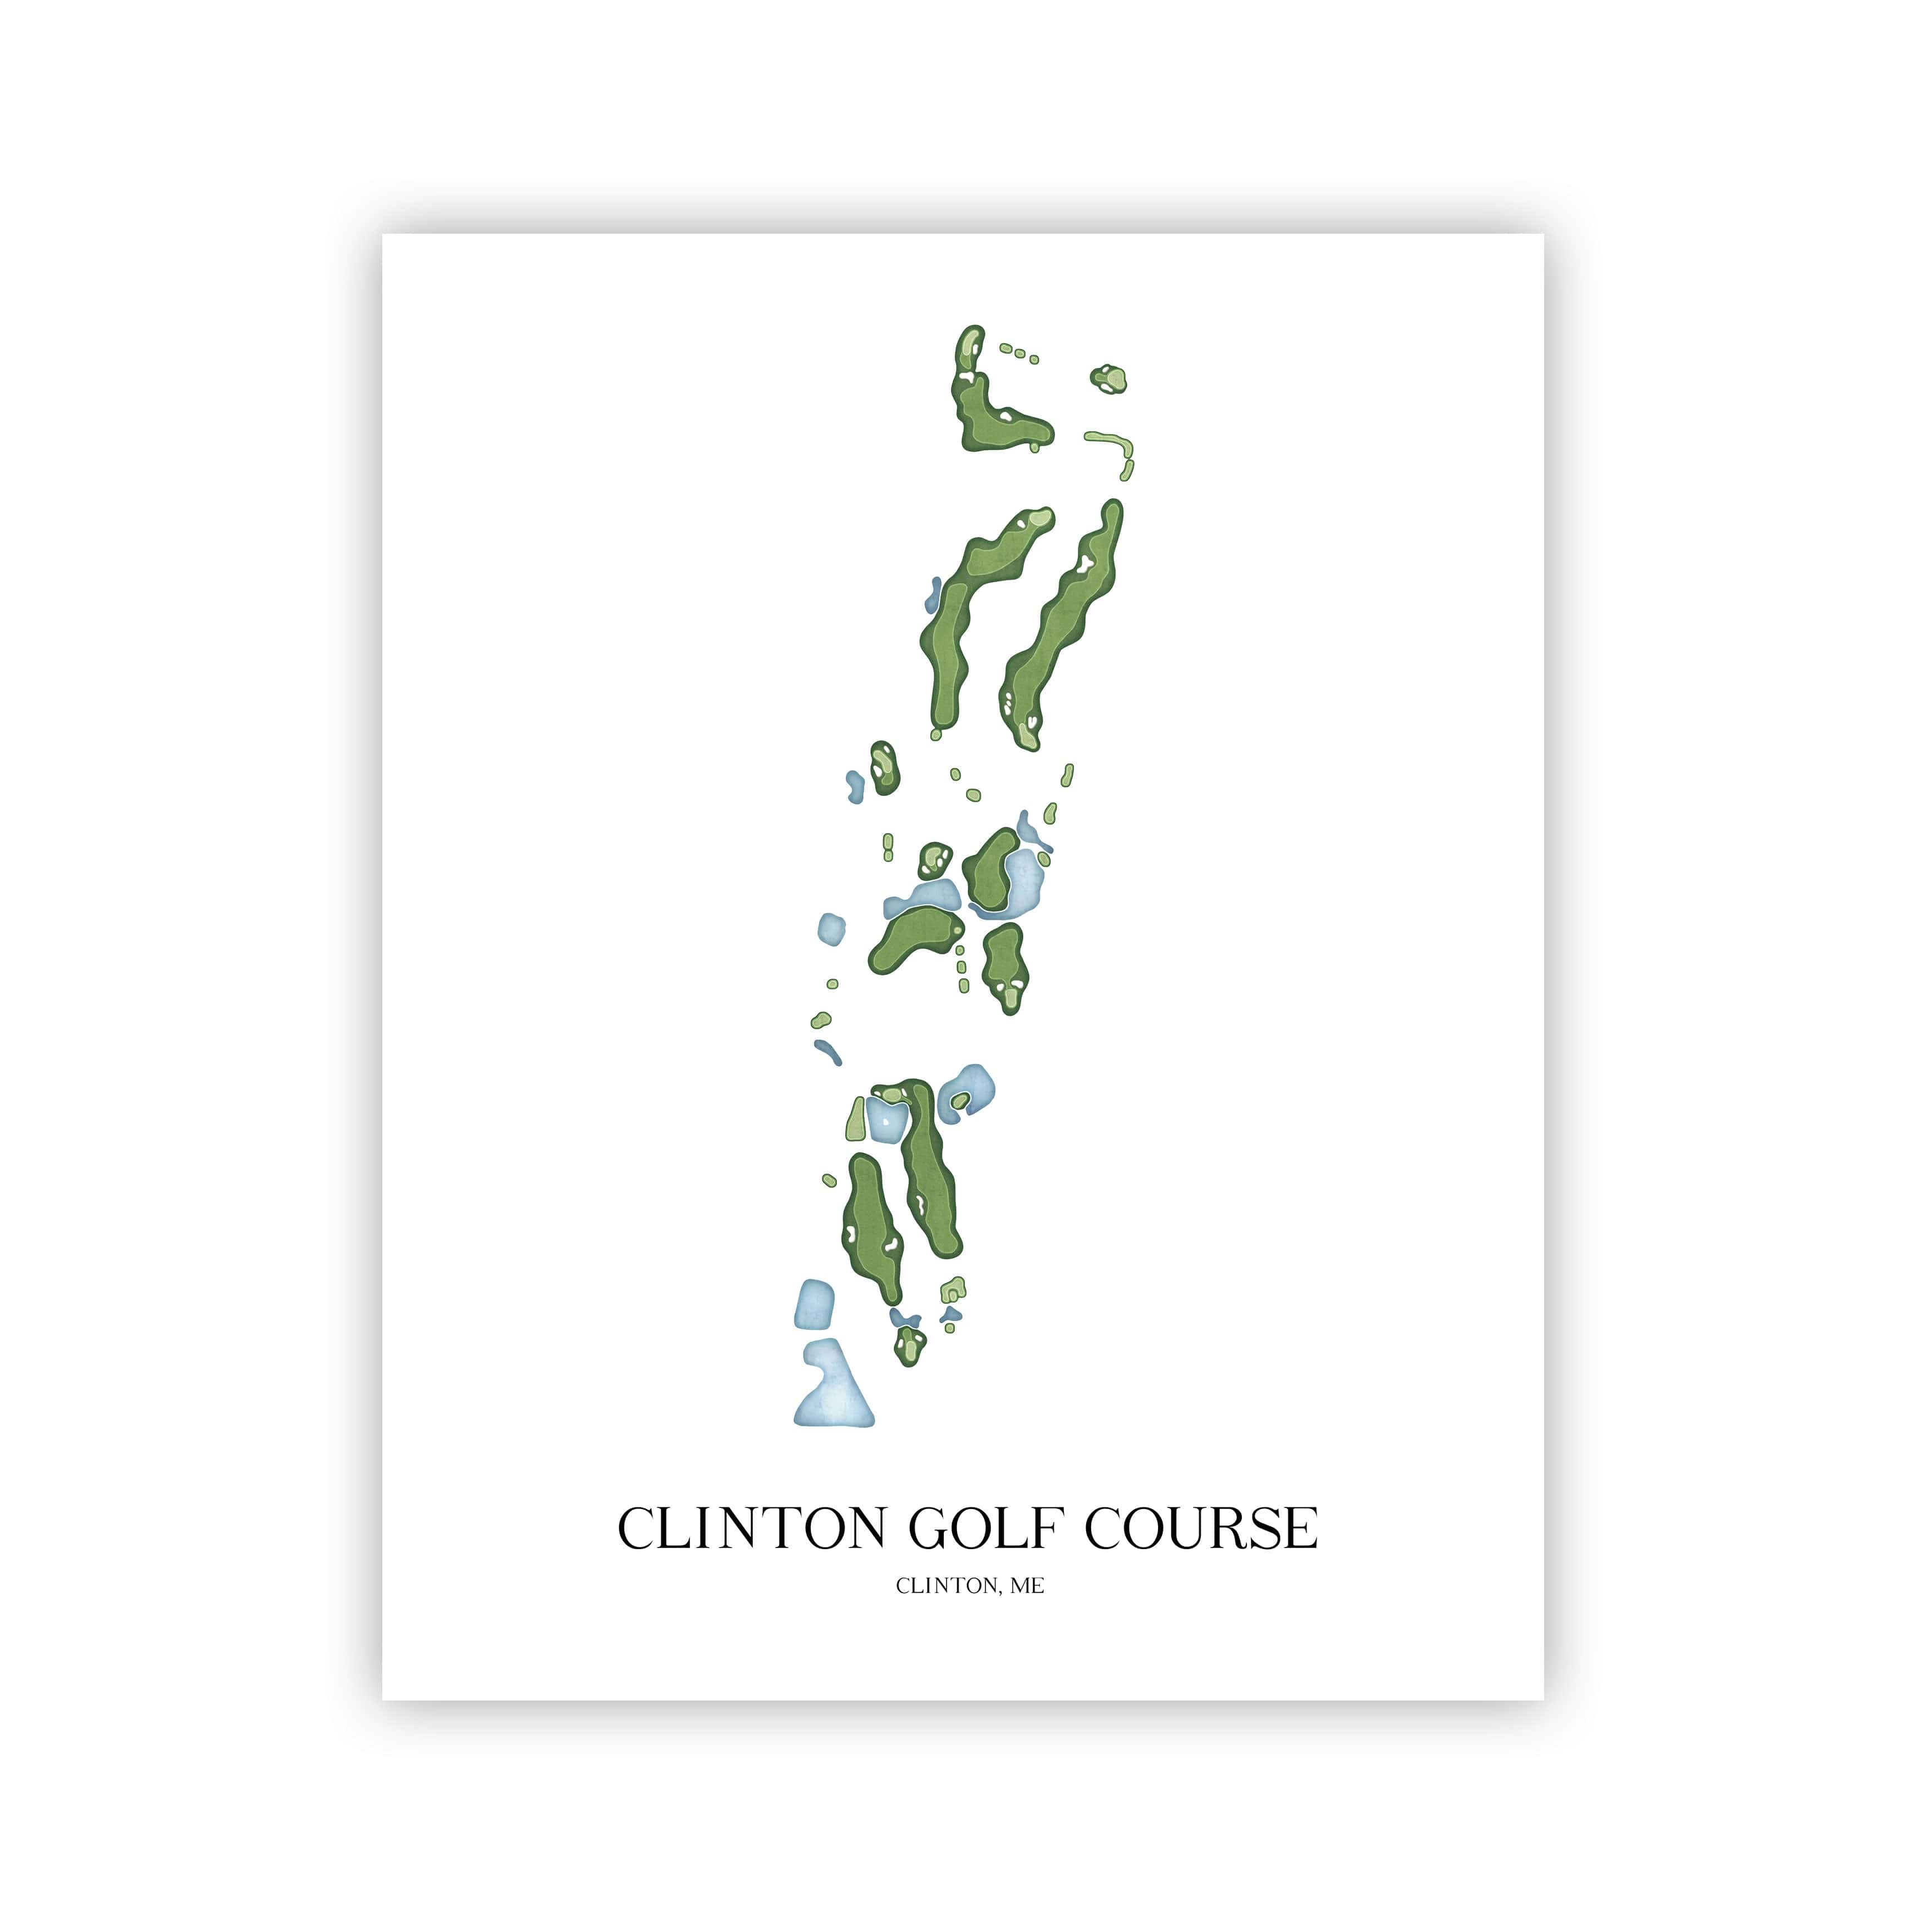 The 19th Hole Golf Shop - Golf Course Prints -  Clinton Golf Course Golf Course Map